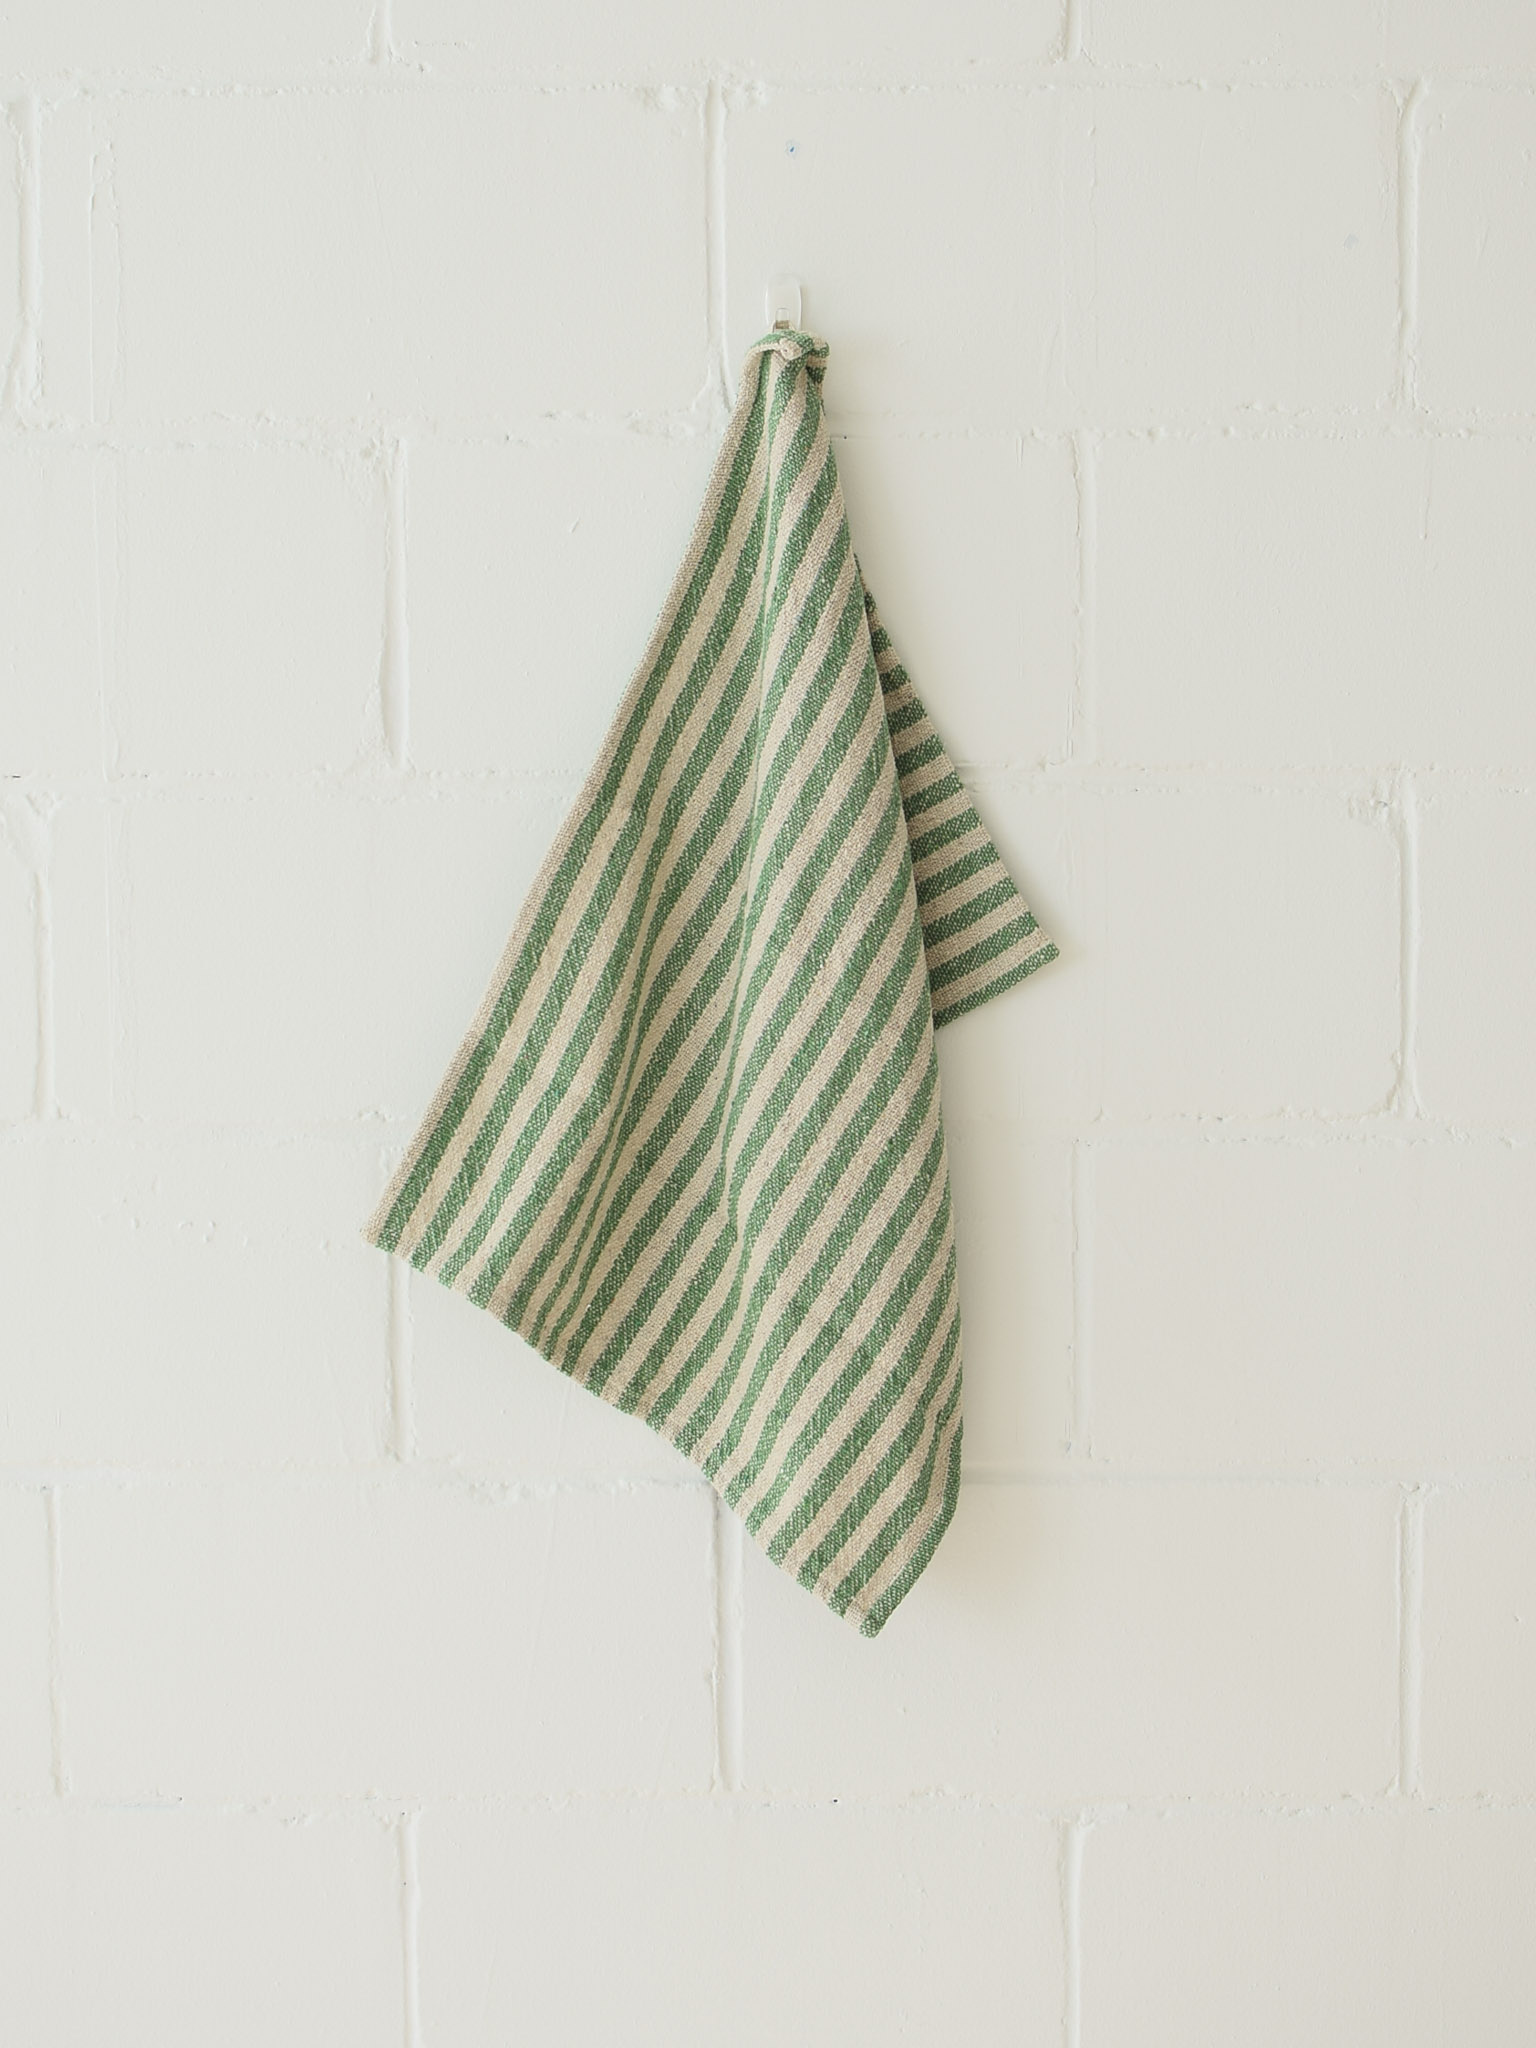 Green-beige striped dishcloths